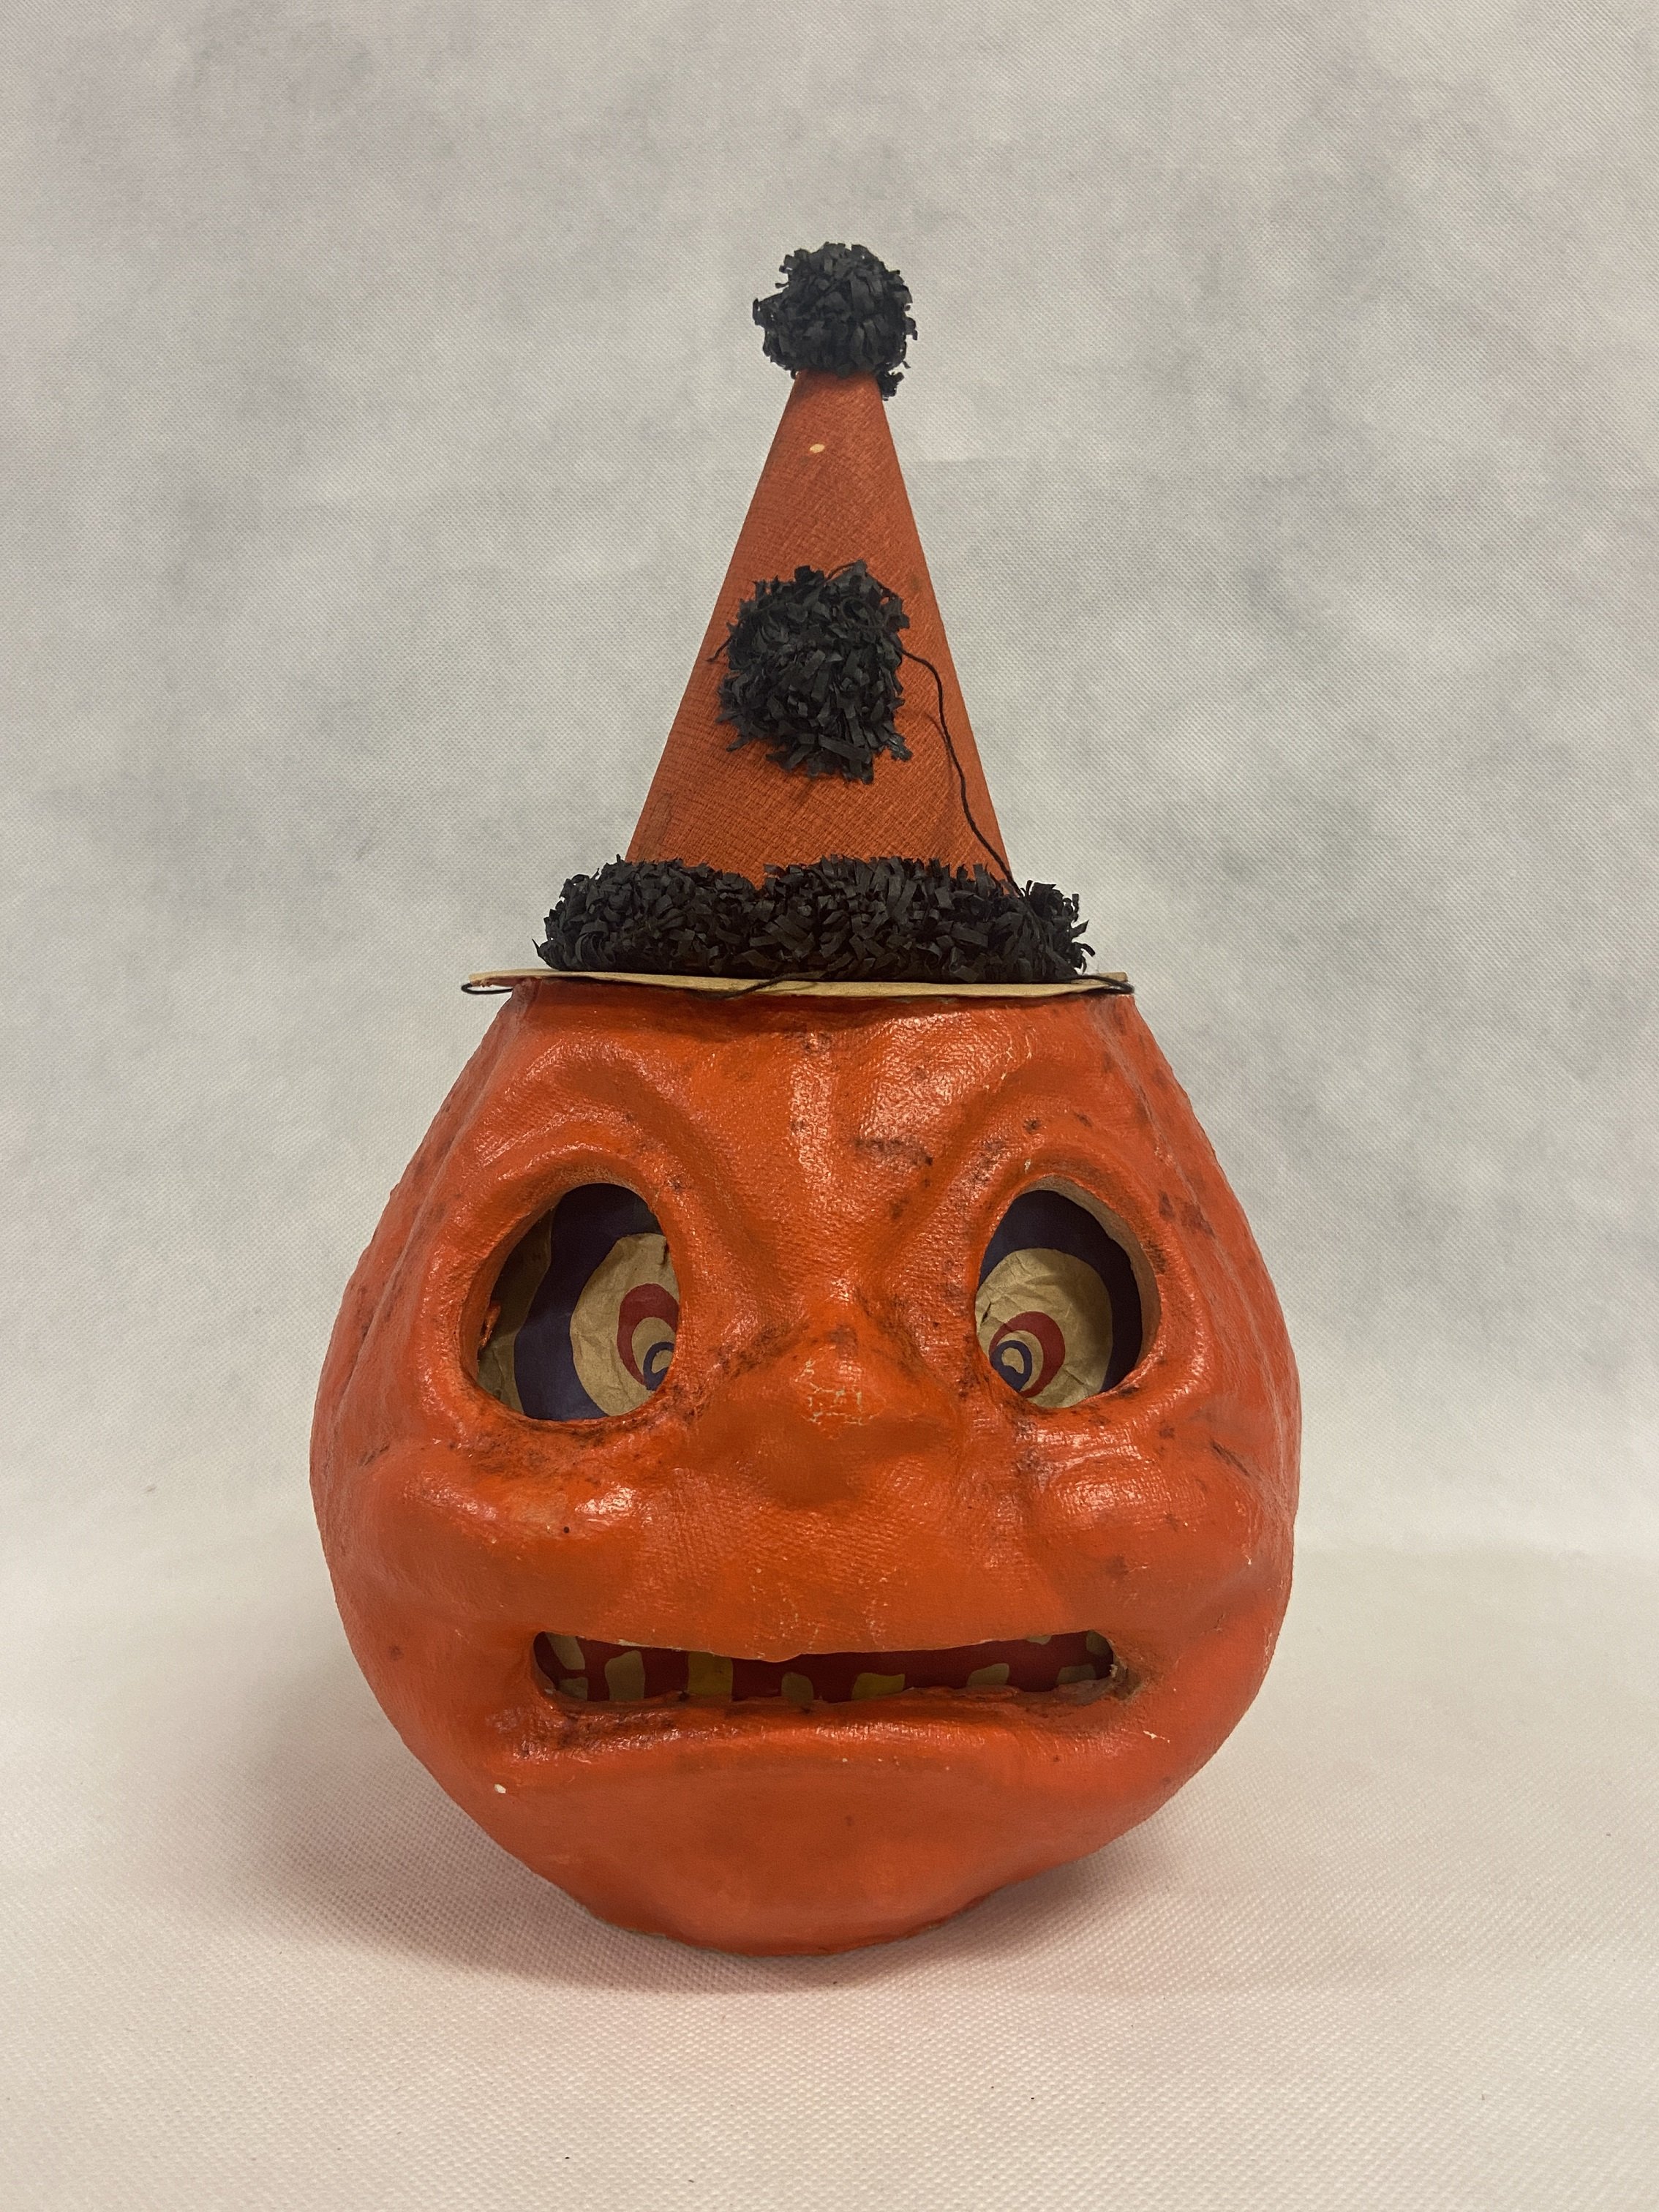 Jack-O-Lantern, Scary Hallowen Pumpkin - Halloween Gift  Art Board Print  for Sale by GaMer-FoR-eVeR